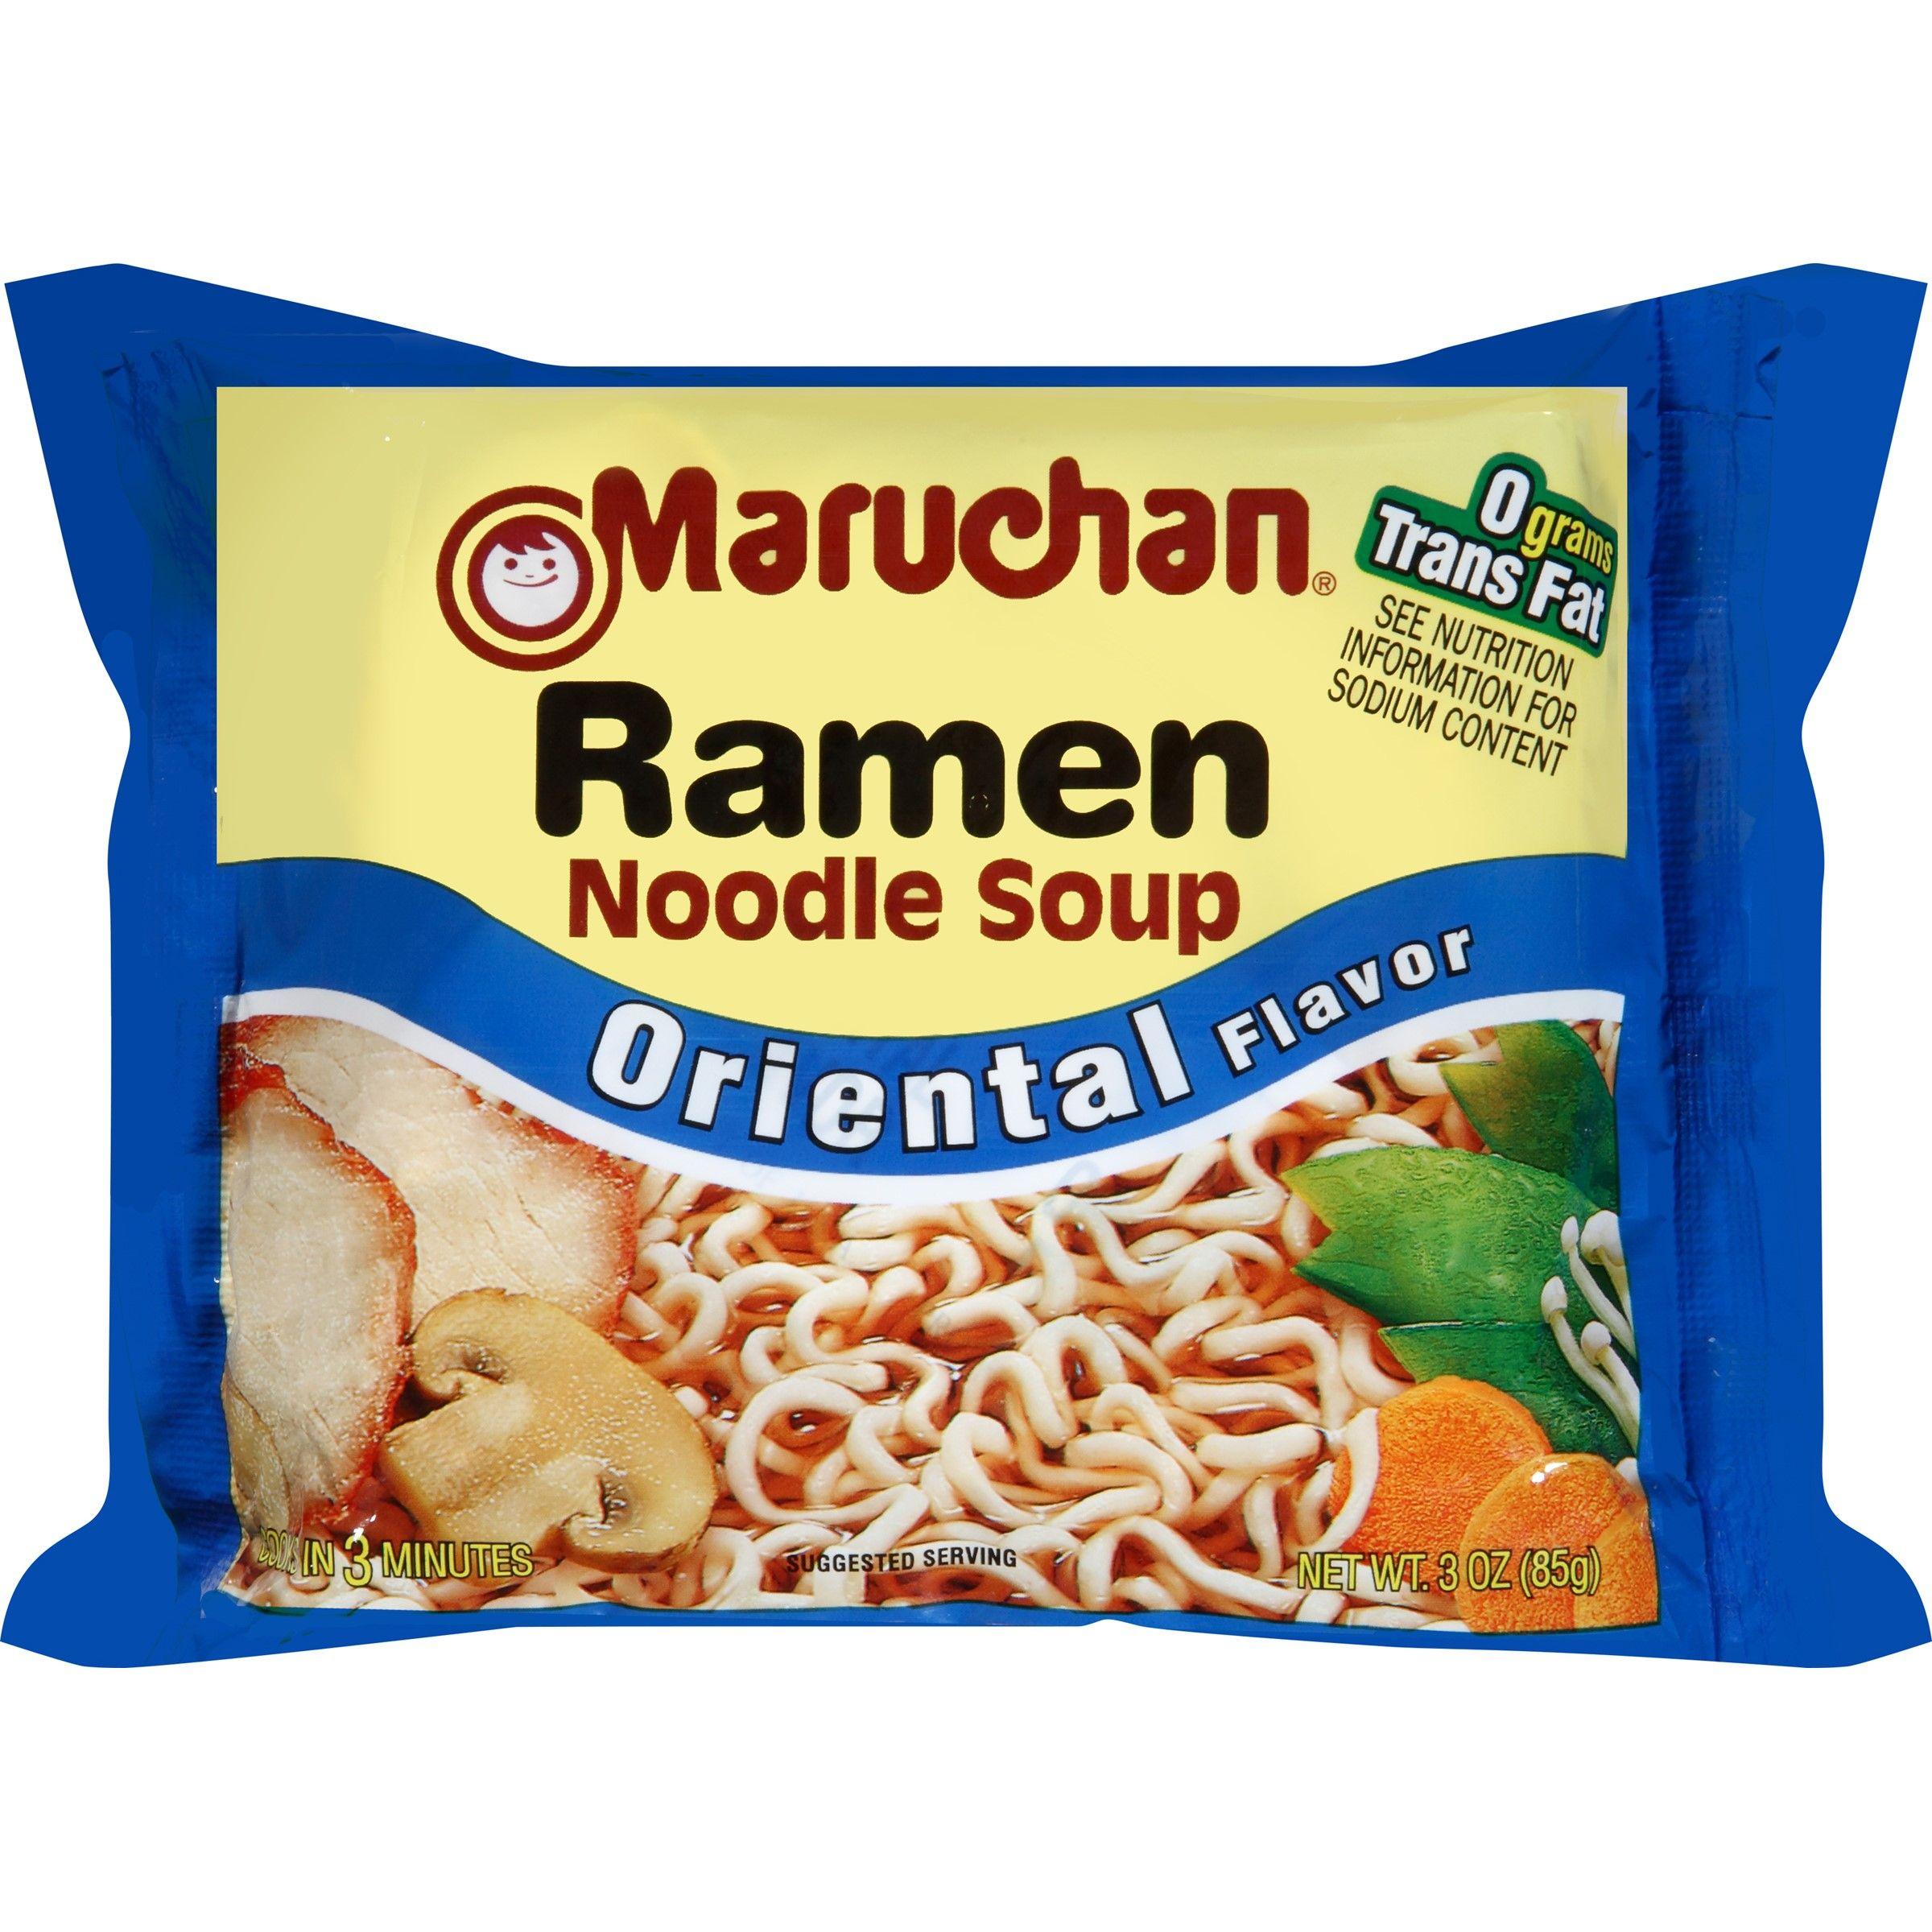 Maruchan Ramen Logo - Maruchan: Ramen Noodle Oriental Flavor Soup, 3 Oz (Pack of 24)